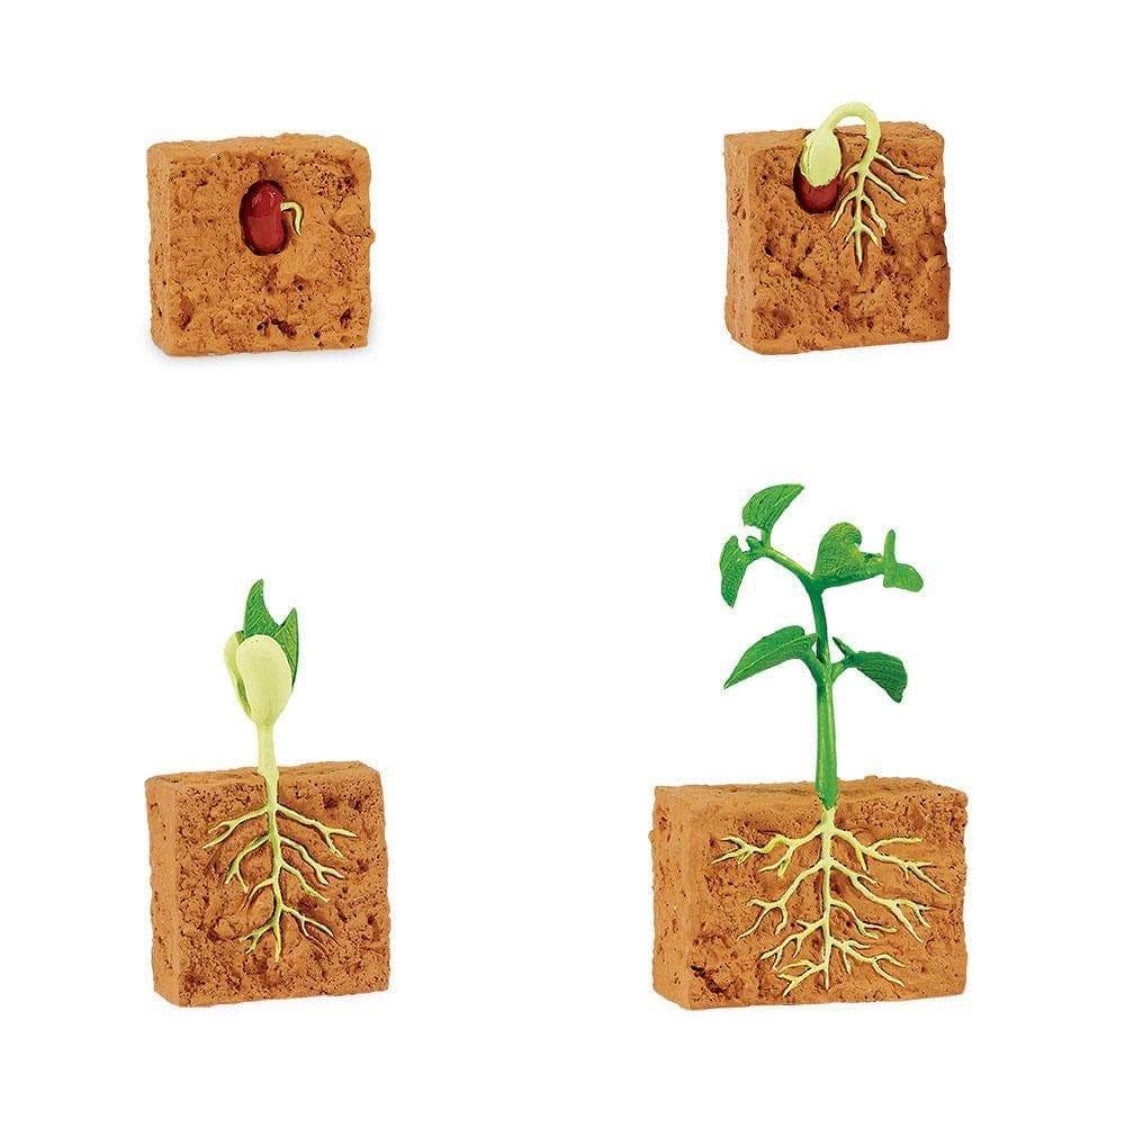 Safari Ltd. Life Cycle of a Green Bean Plant